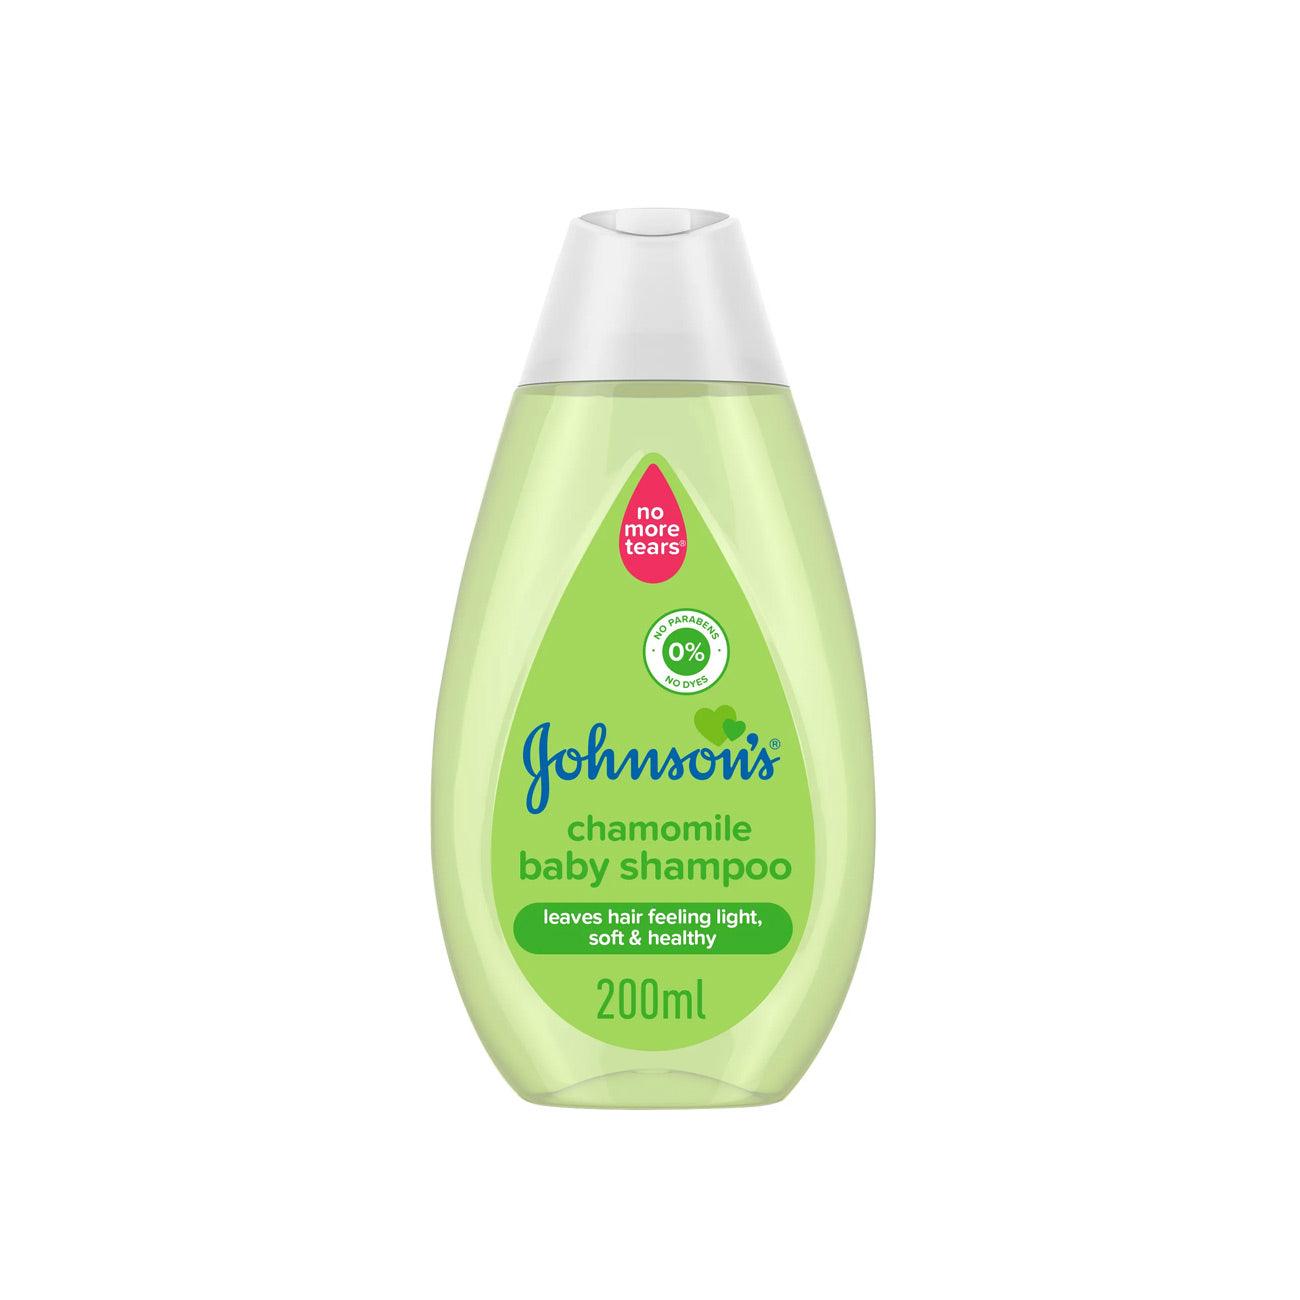 Johnson's Chamomile baby shampoo 200 ml